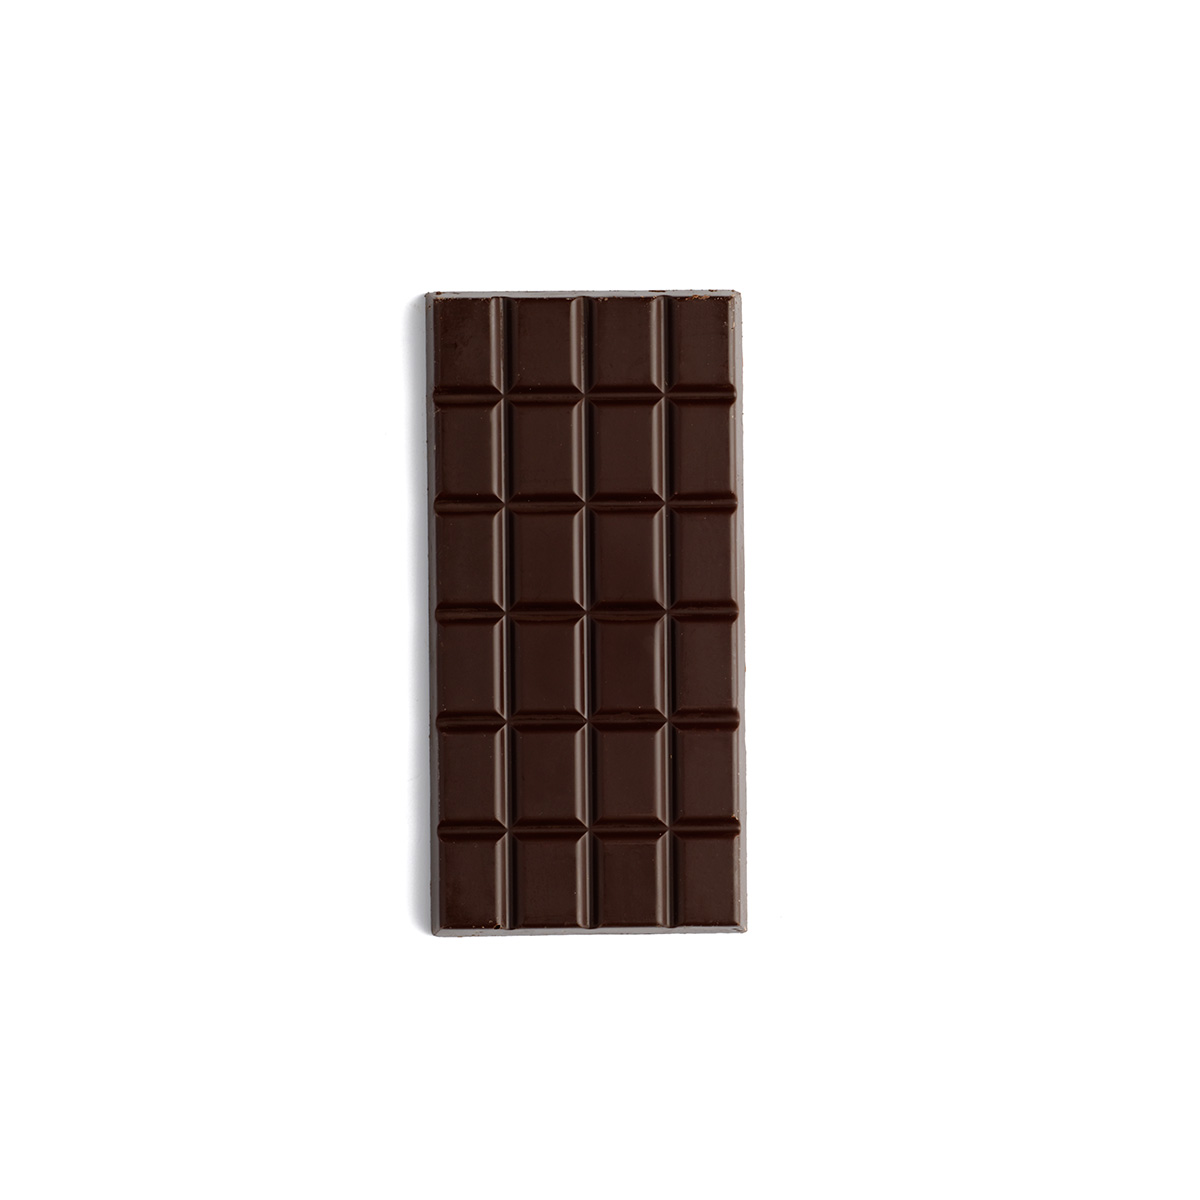 Tablette chocolat noir pure origine Tanzanie 75%